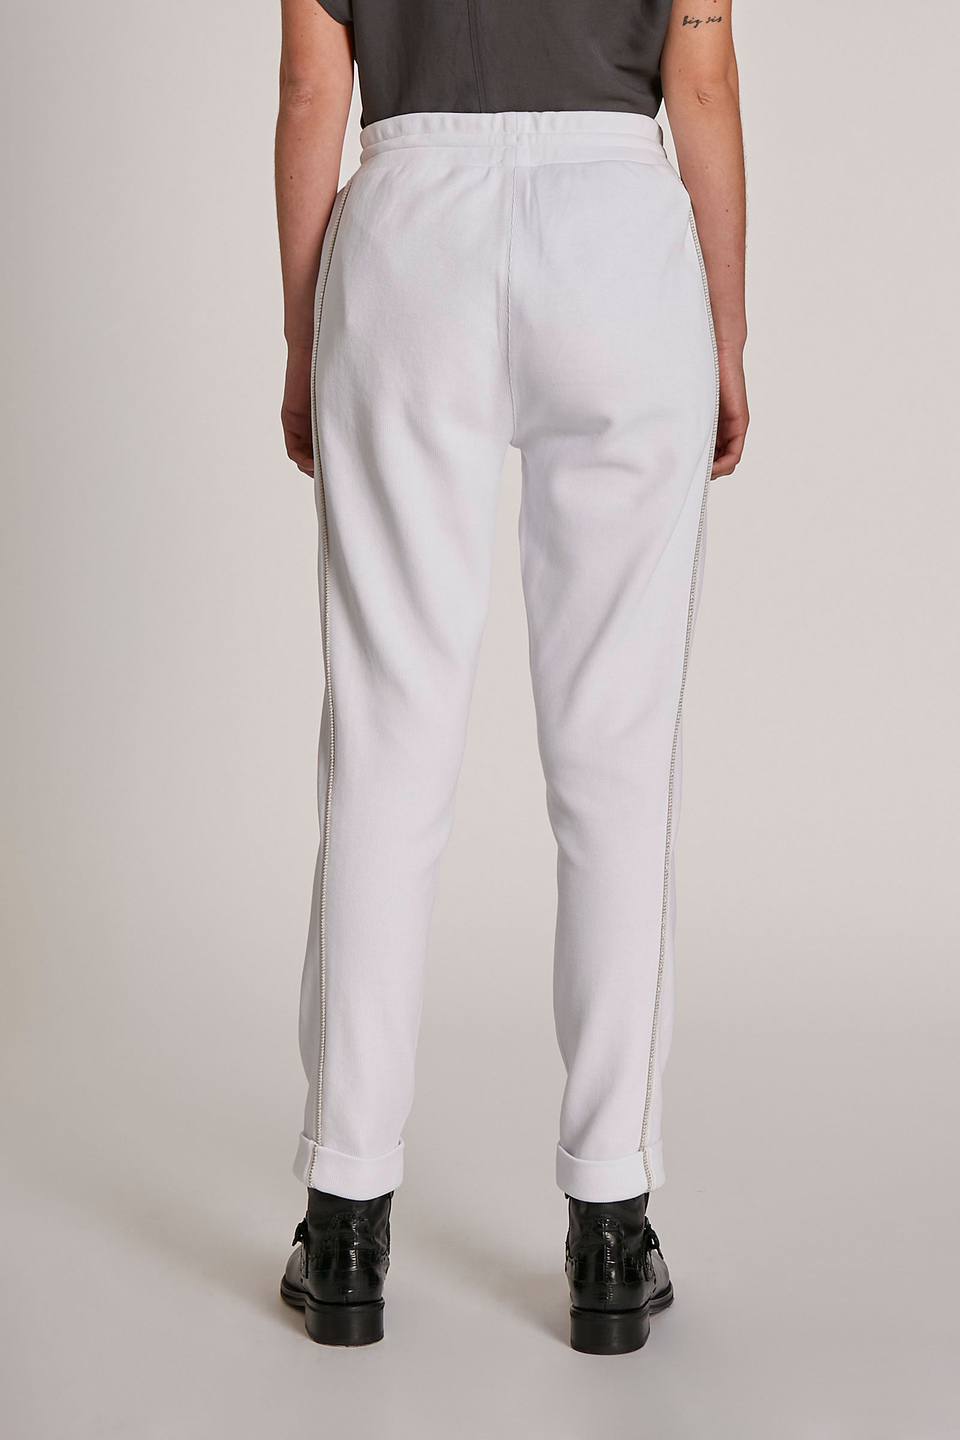 Pantalone da donna in cotone regular fit - La Martina - Official Online Shop